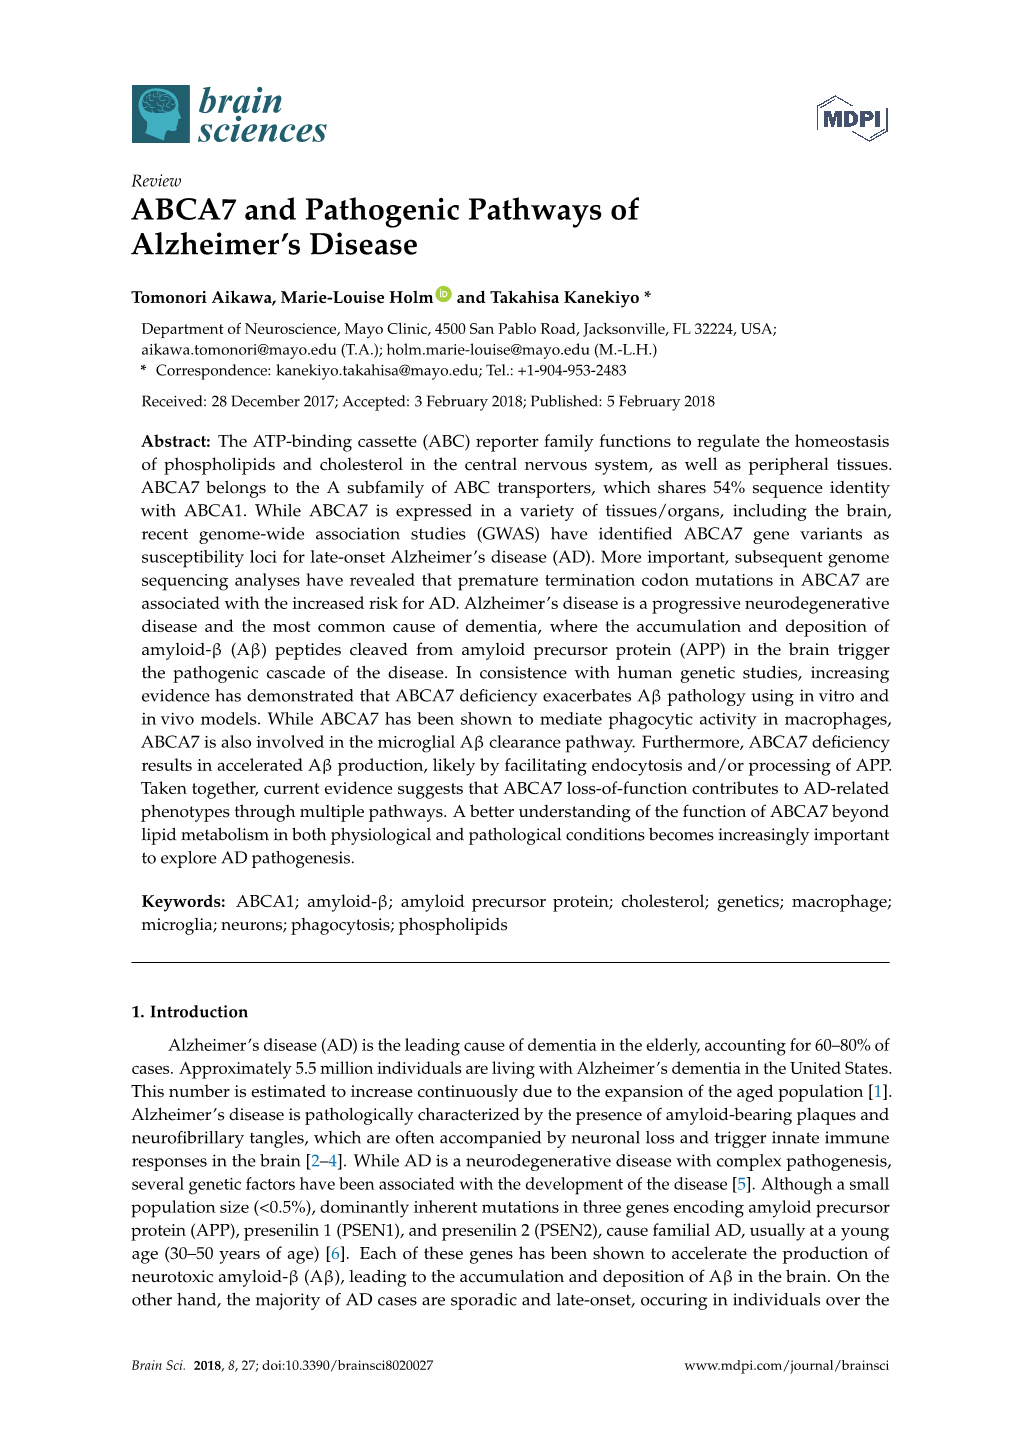 ABCA7 and Pathogenic Pathways of Alzheimer's Disease